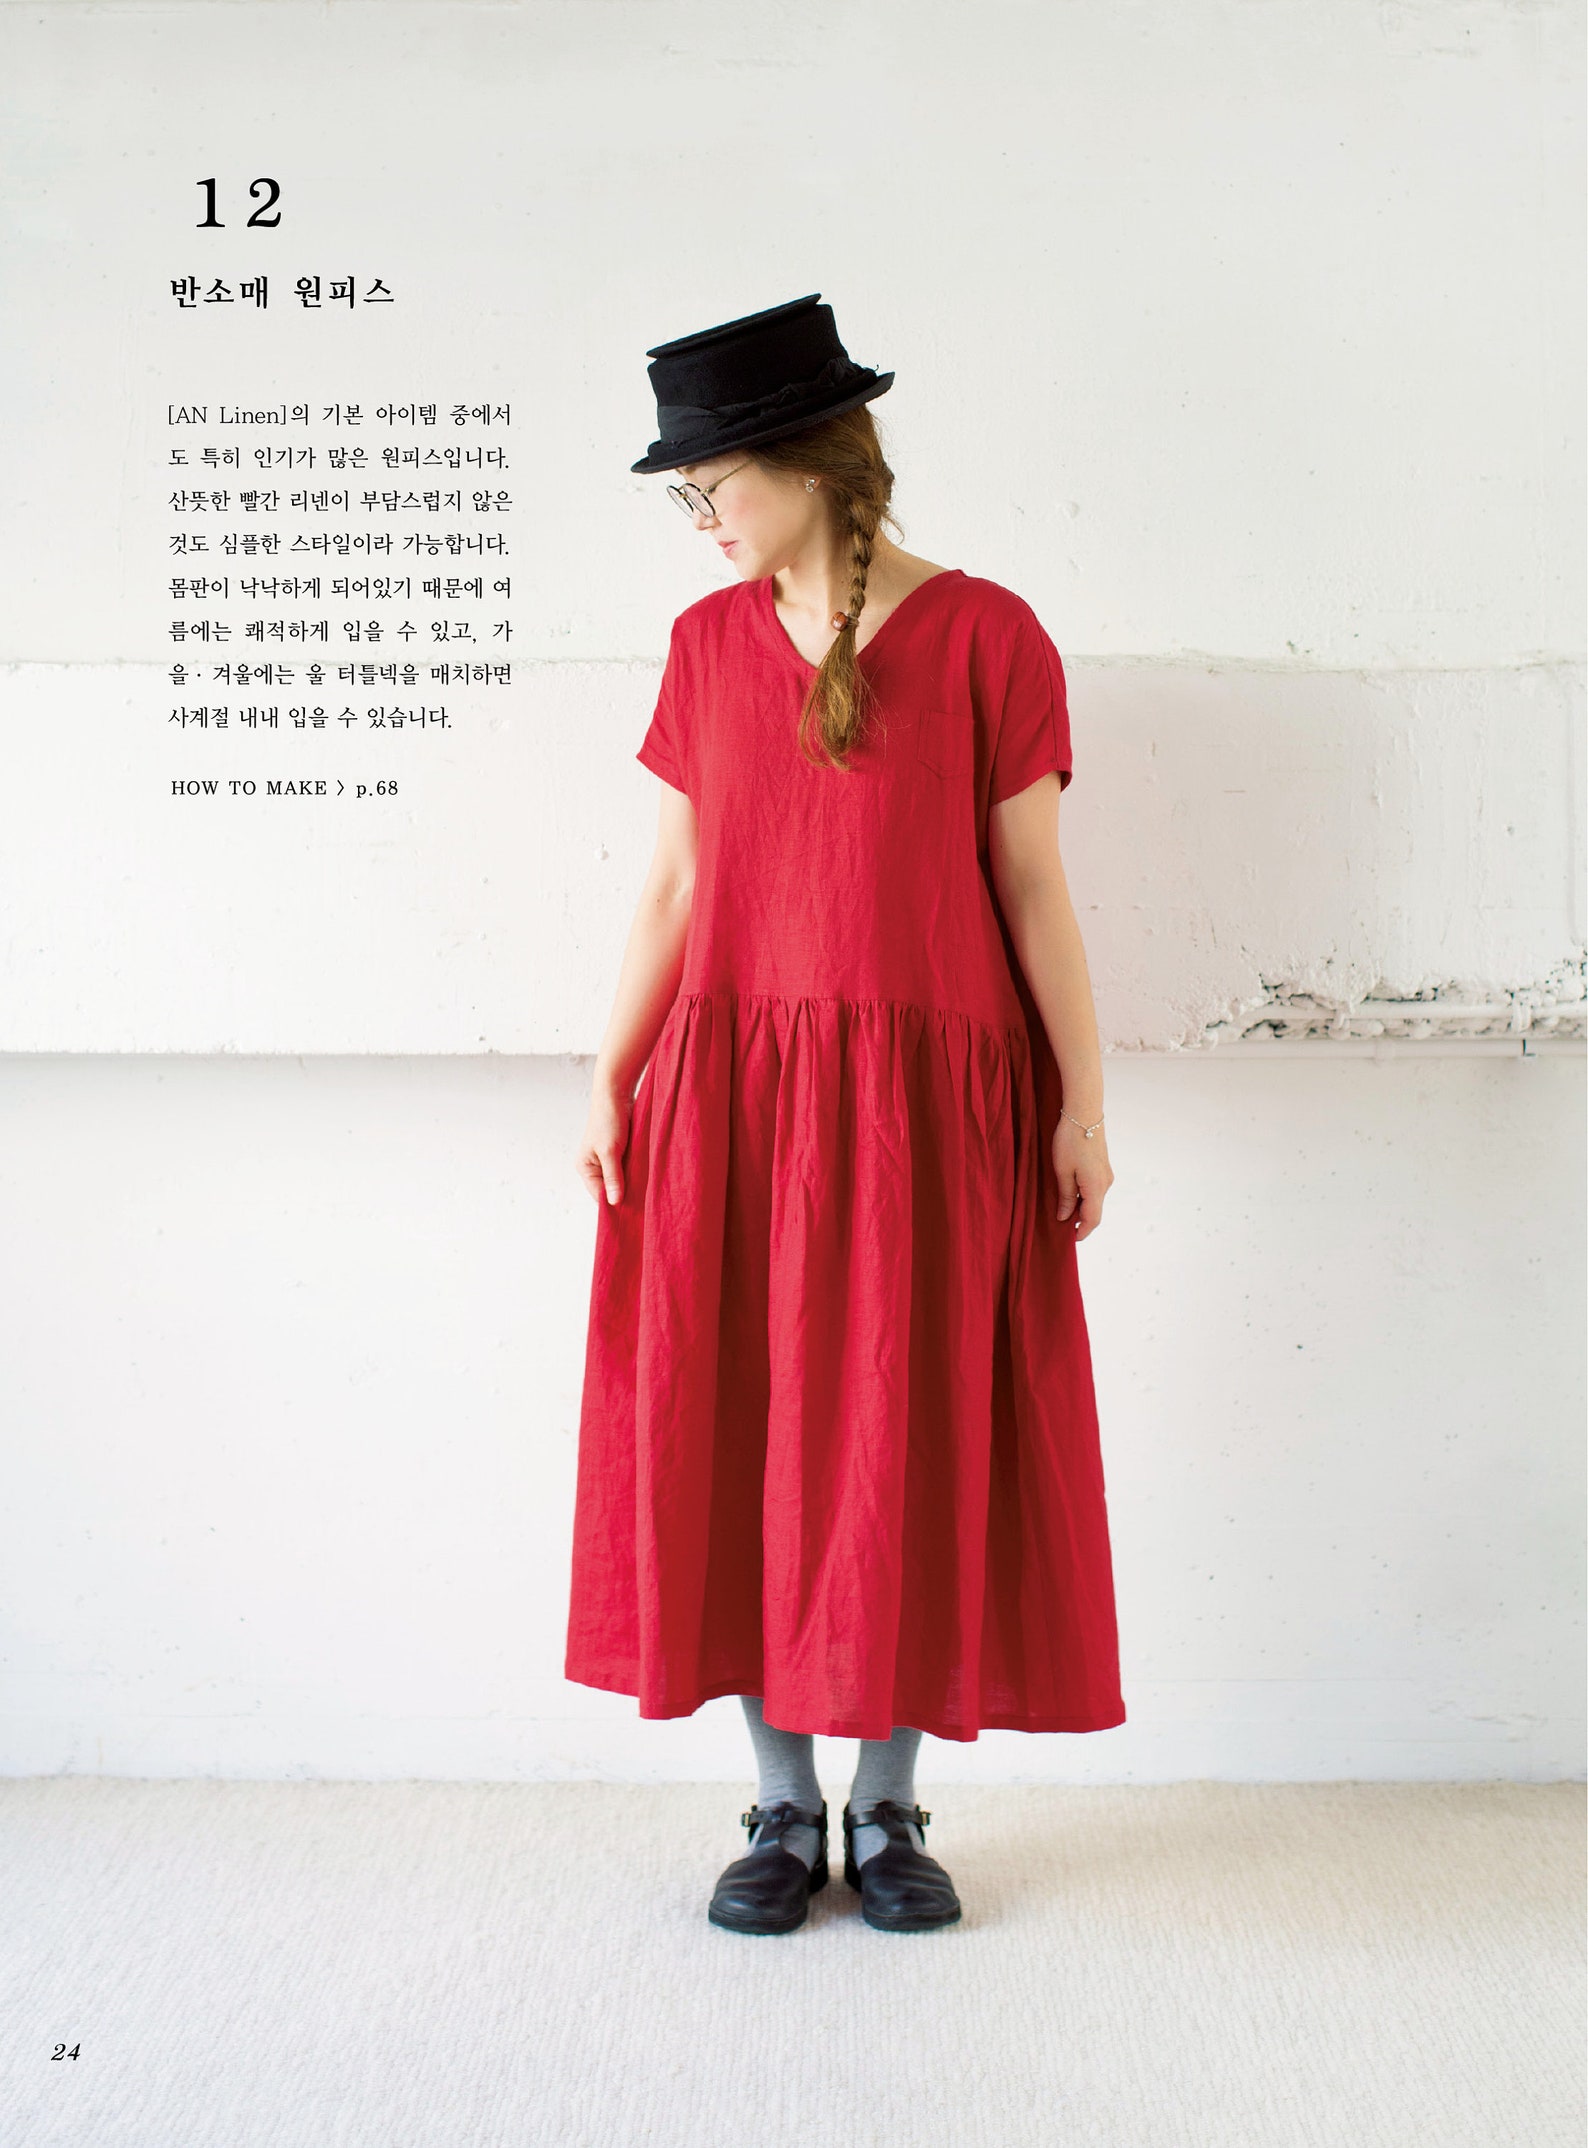 Overfit women's clothing made of linen Korean translation | Etsy